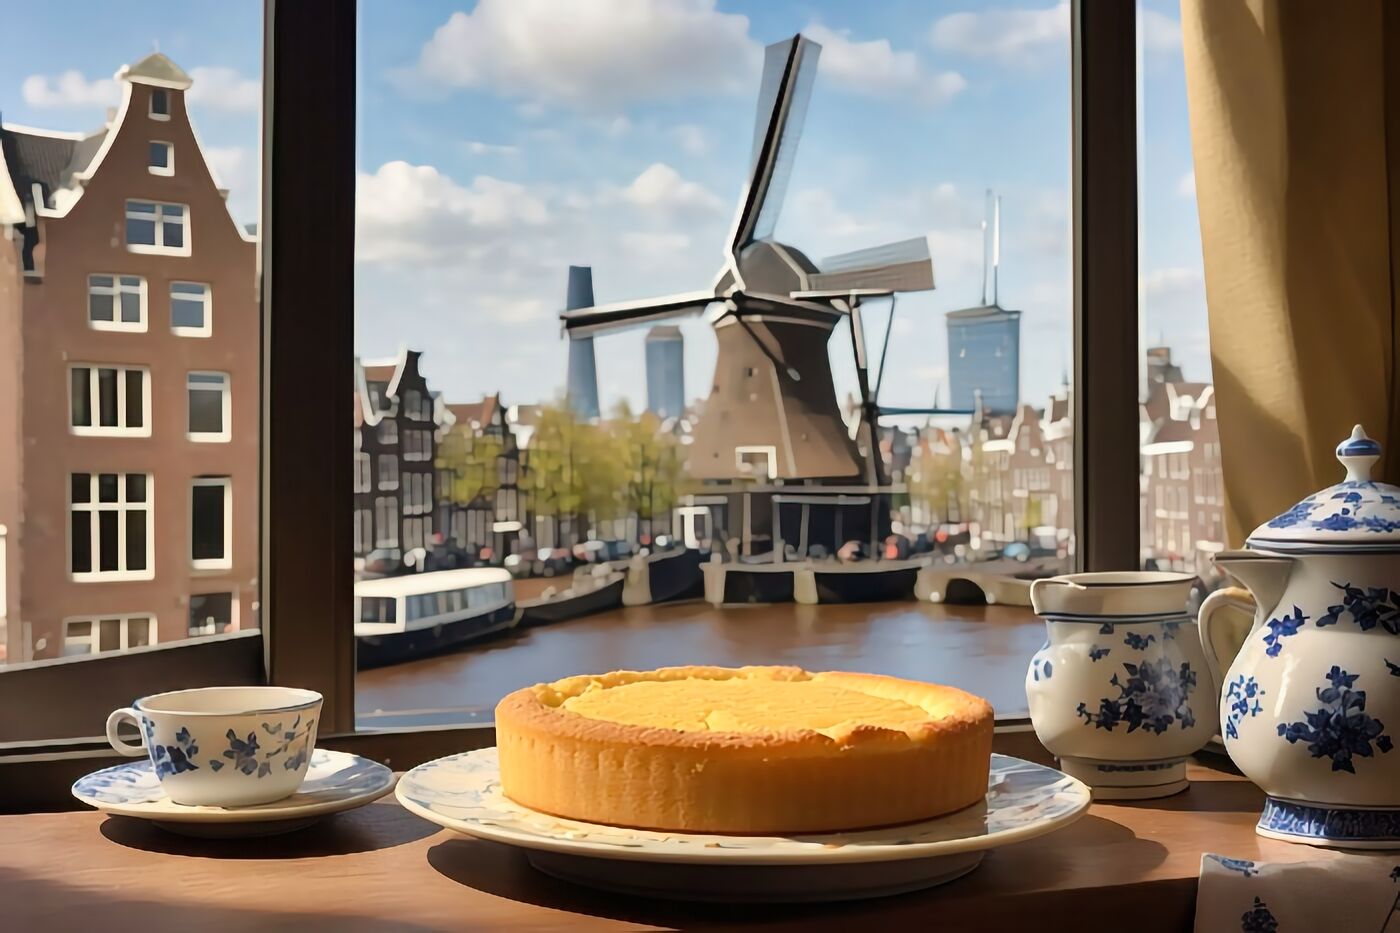 Boterkoek (Dutch Butter Cake) Recipe